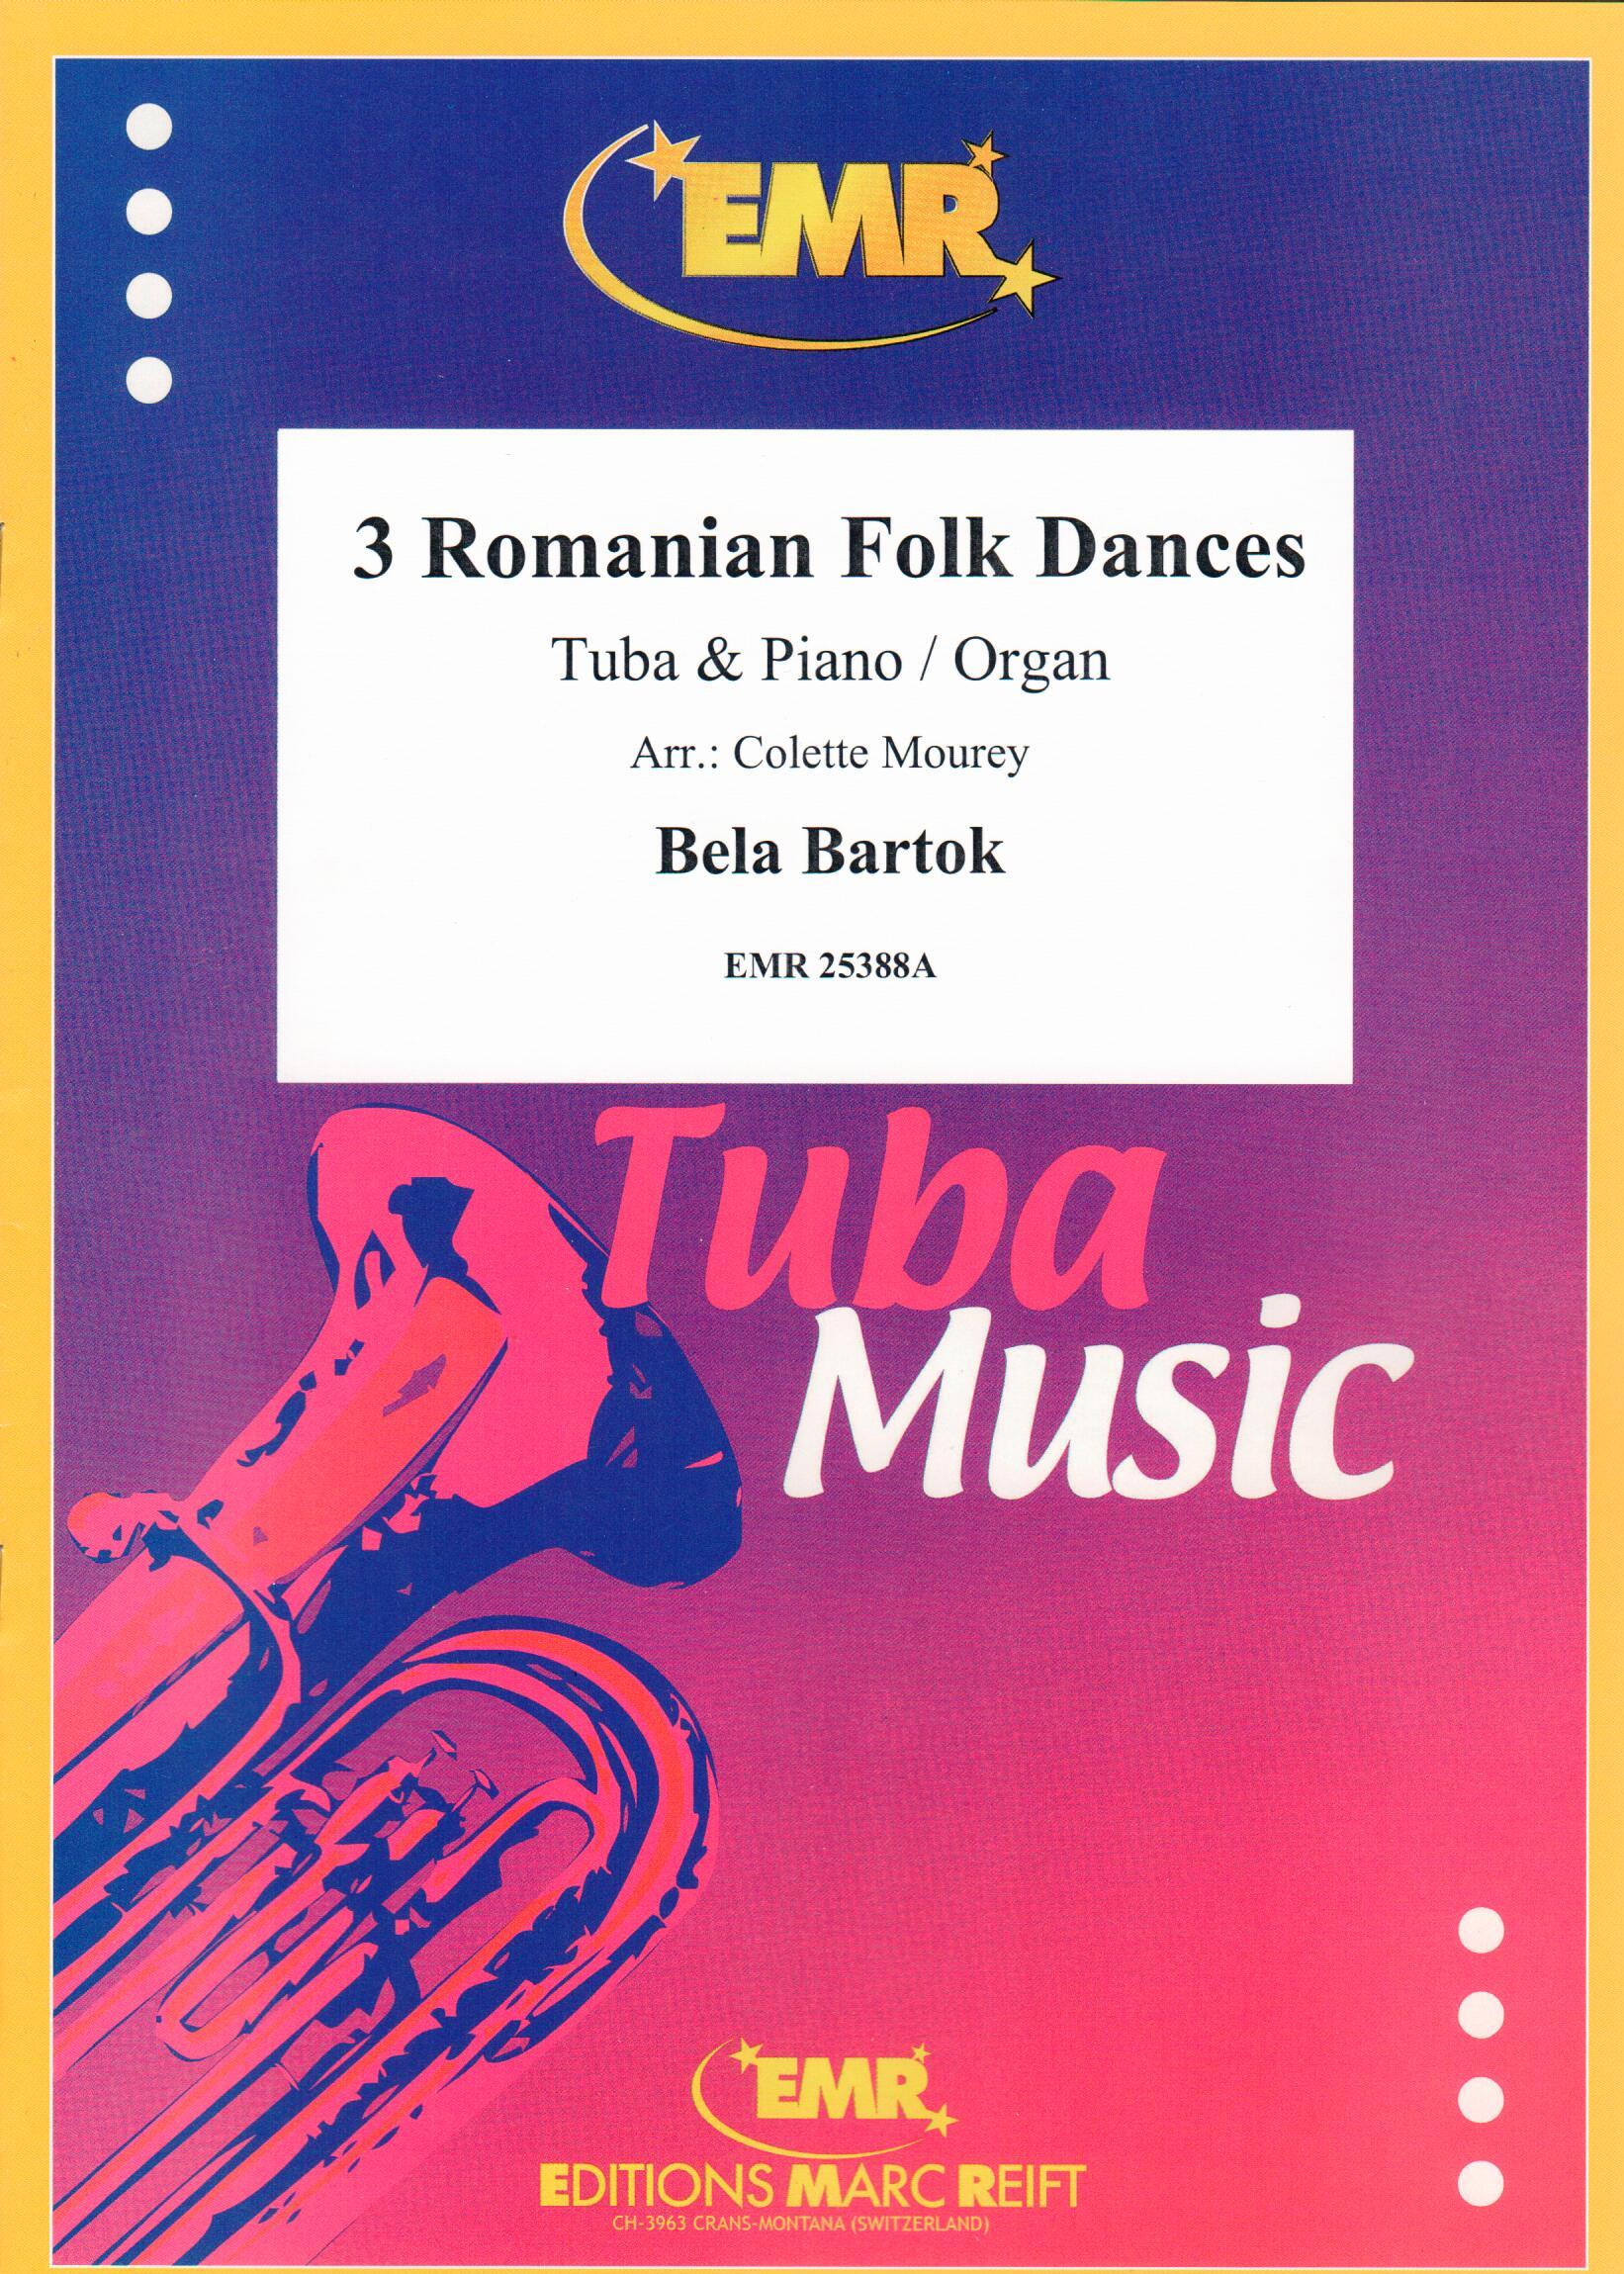 3 ROMANIAN FOLK DANCES, SOLOS - E♭. Bass